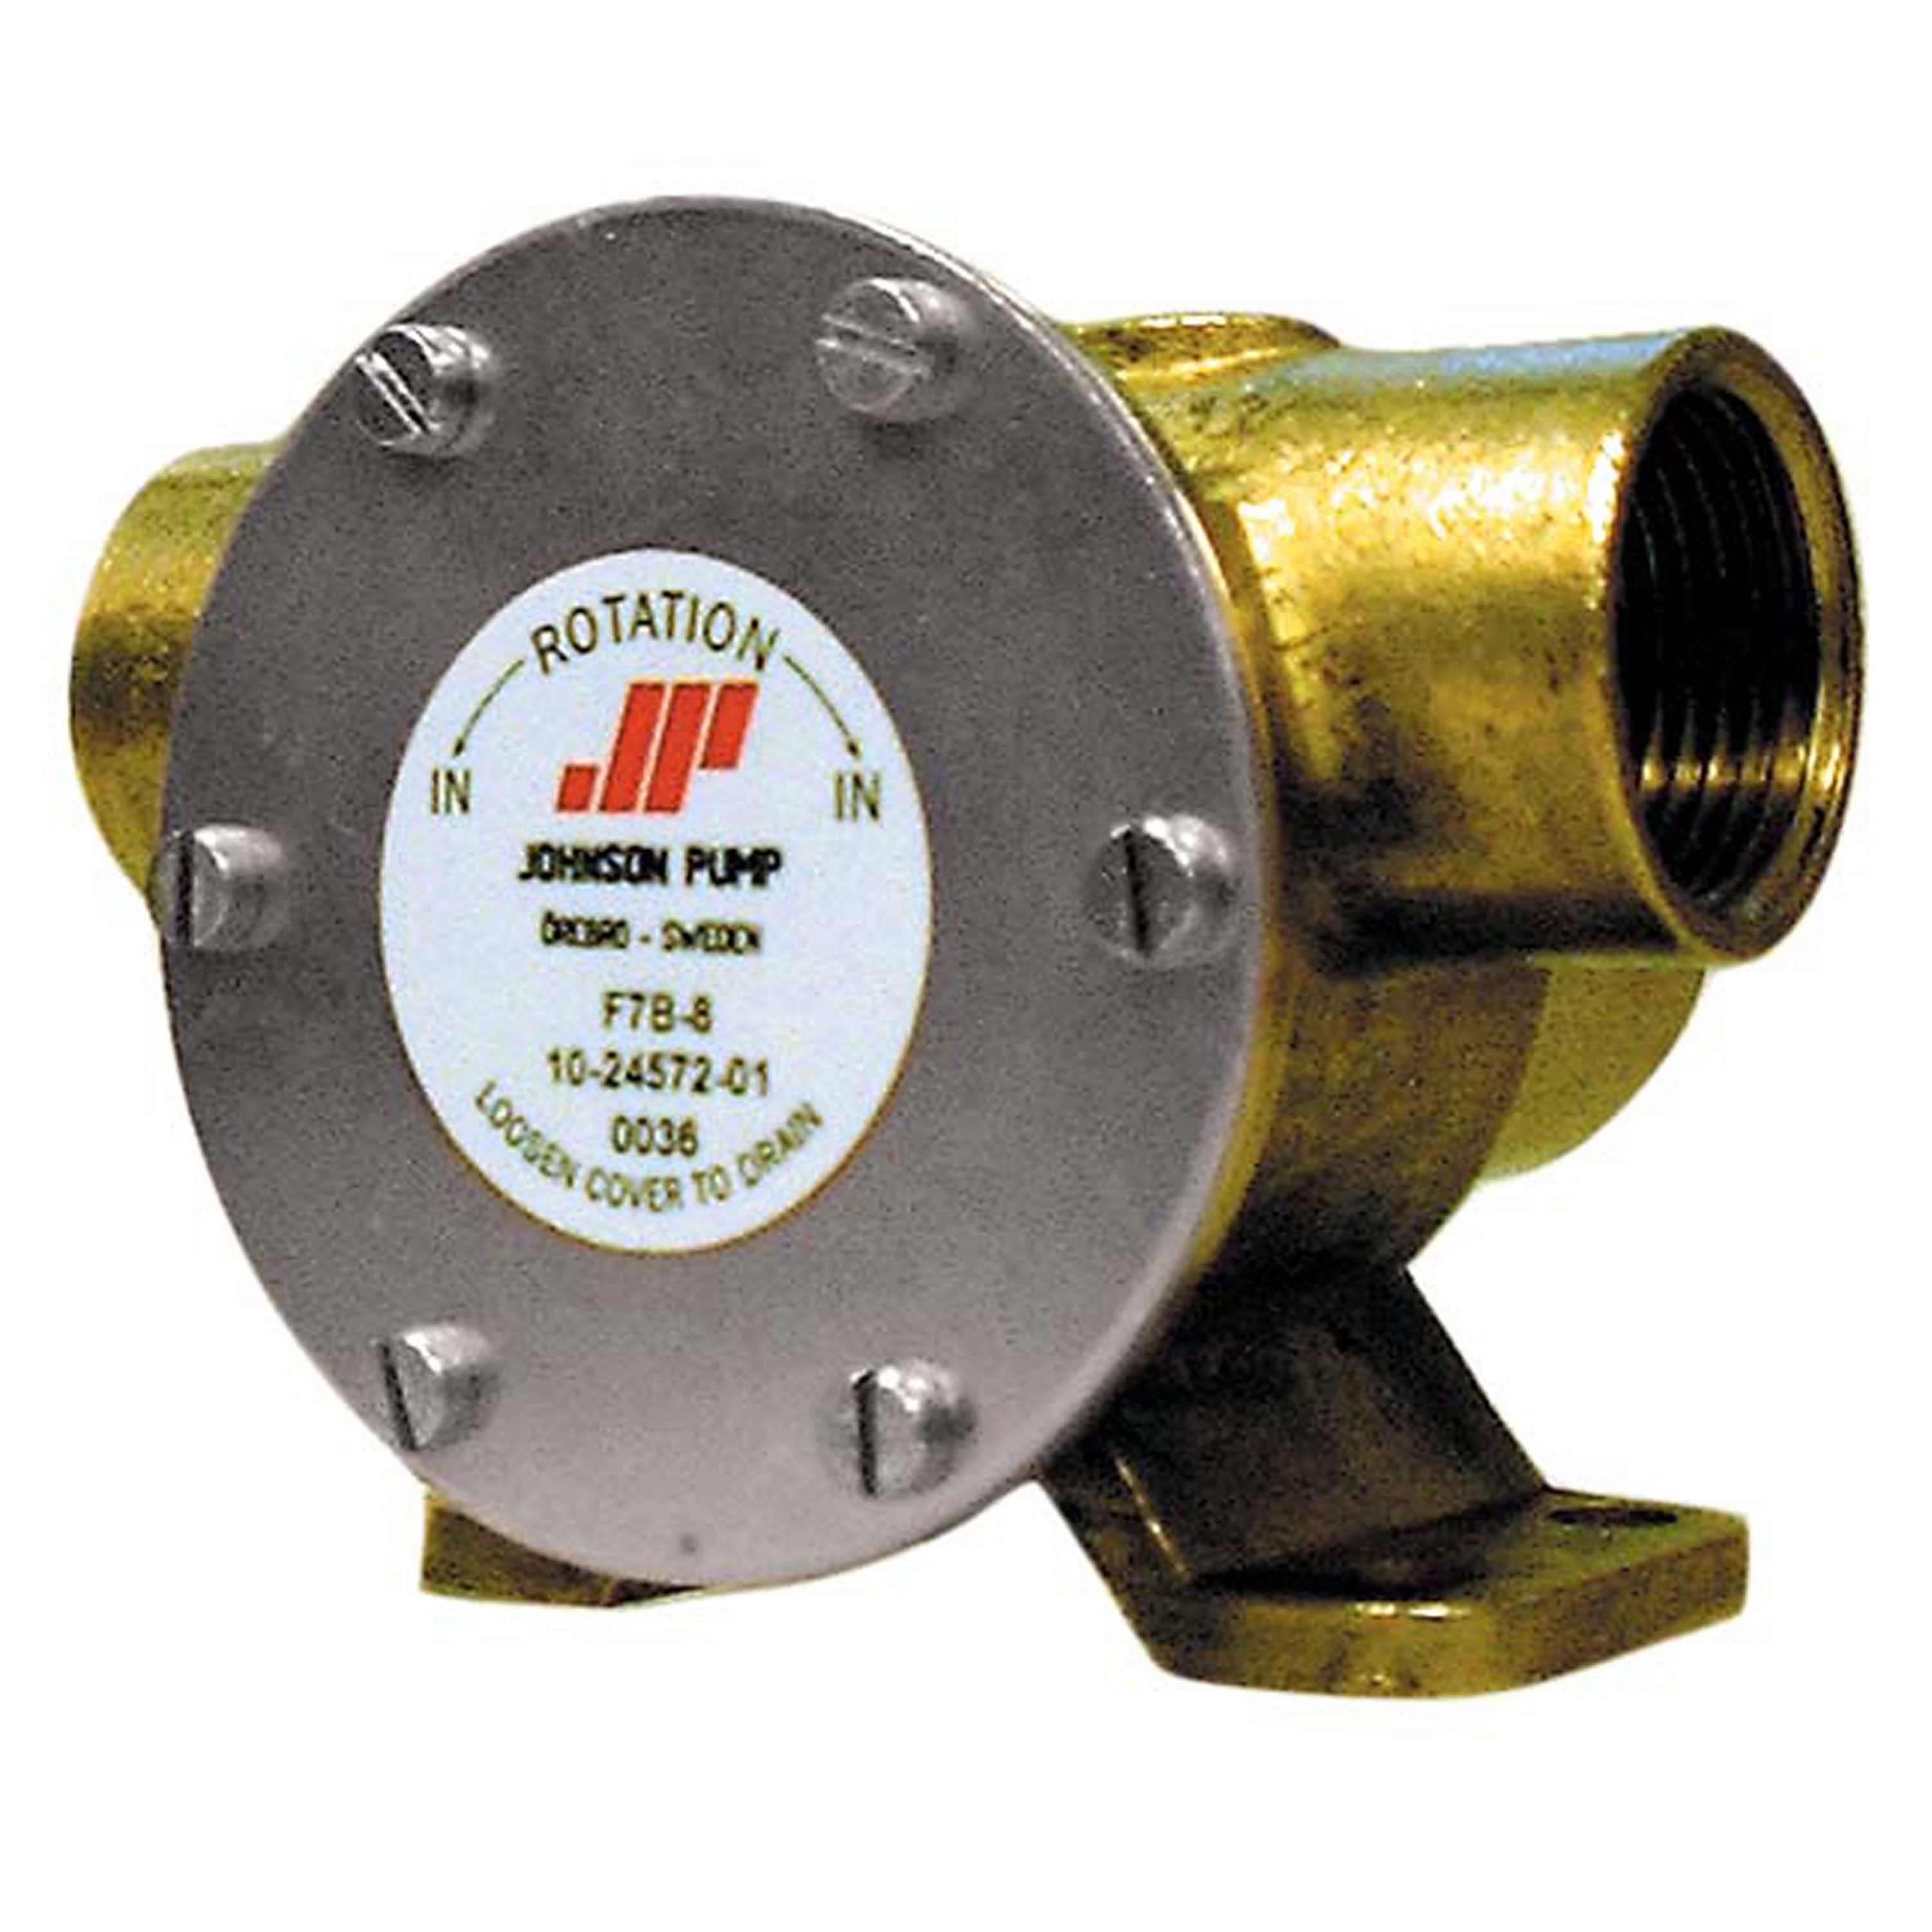 Johnson Pump 10-24569-51 Heavy Duty F35B-8007 Impeller Pump with Mechanical Seal - 3/8" NPT Ports